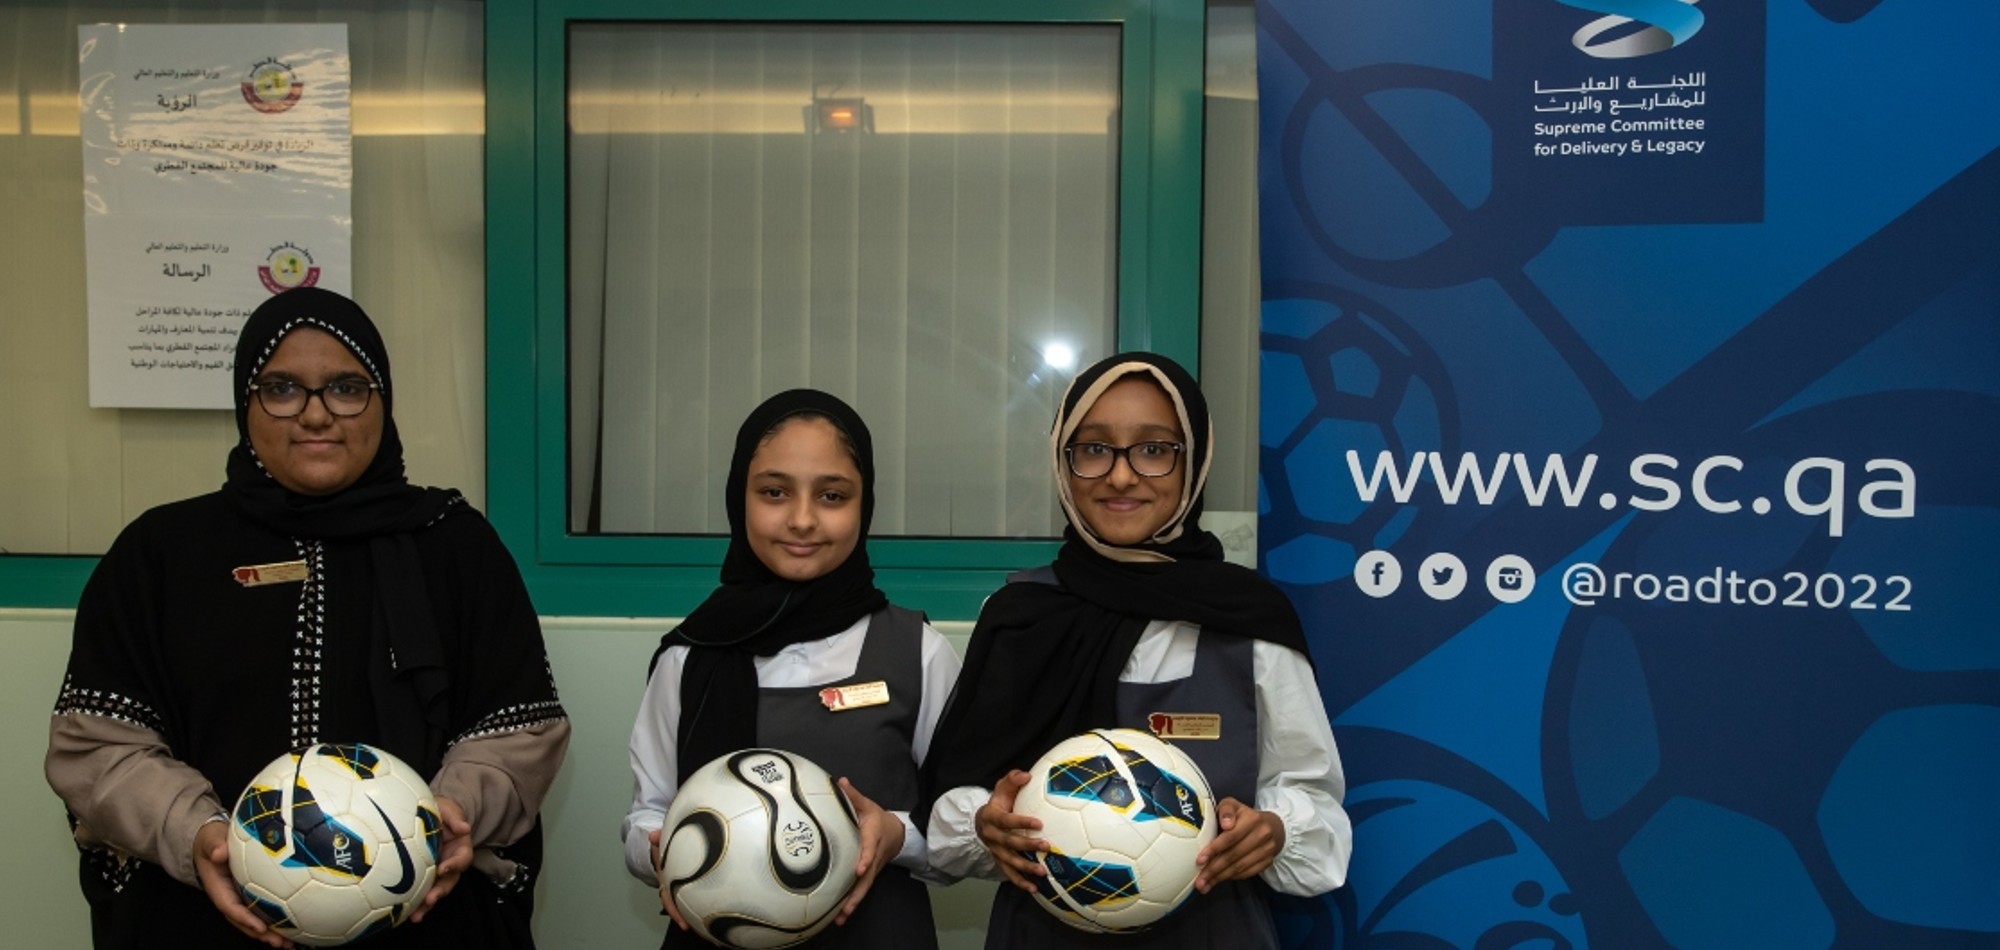 SC’s educational platform Tamreen is building excitement among students ahead of Qatar 2022